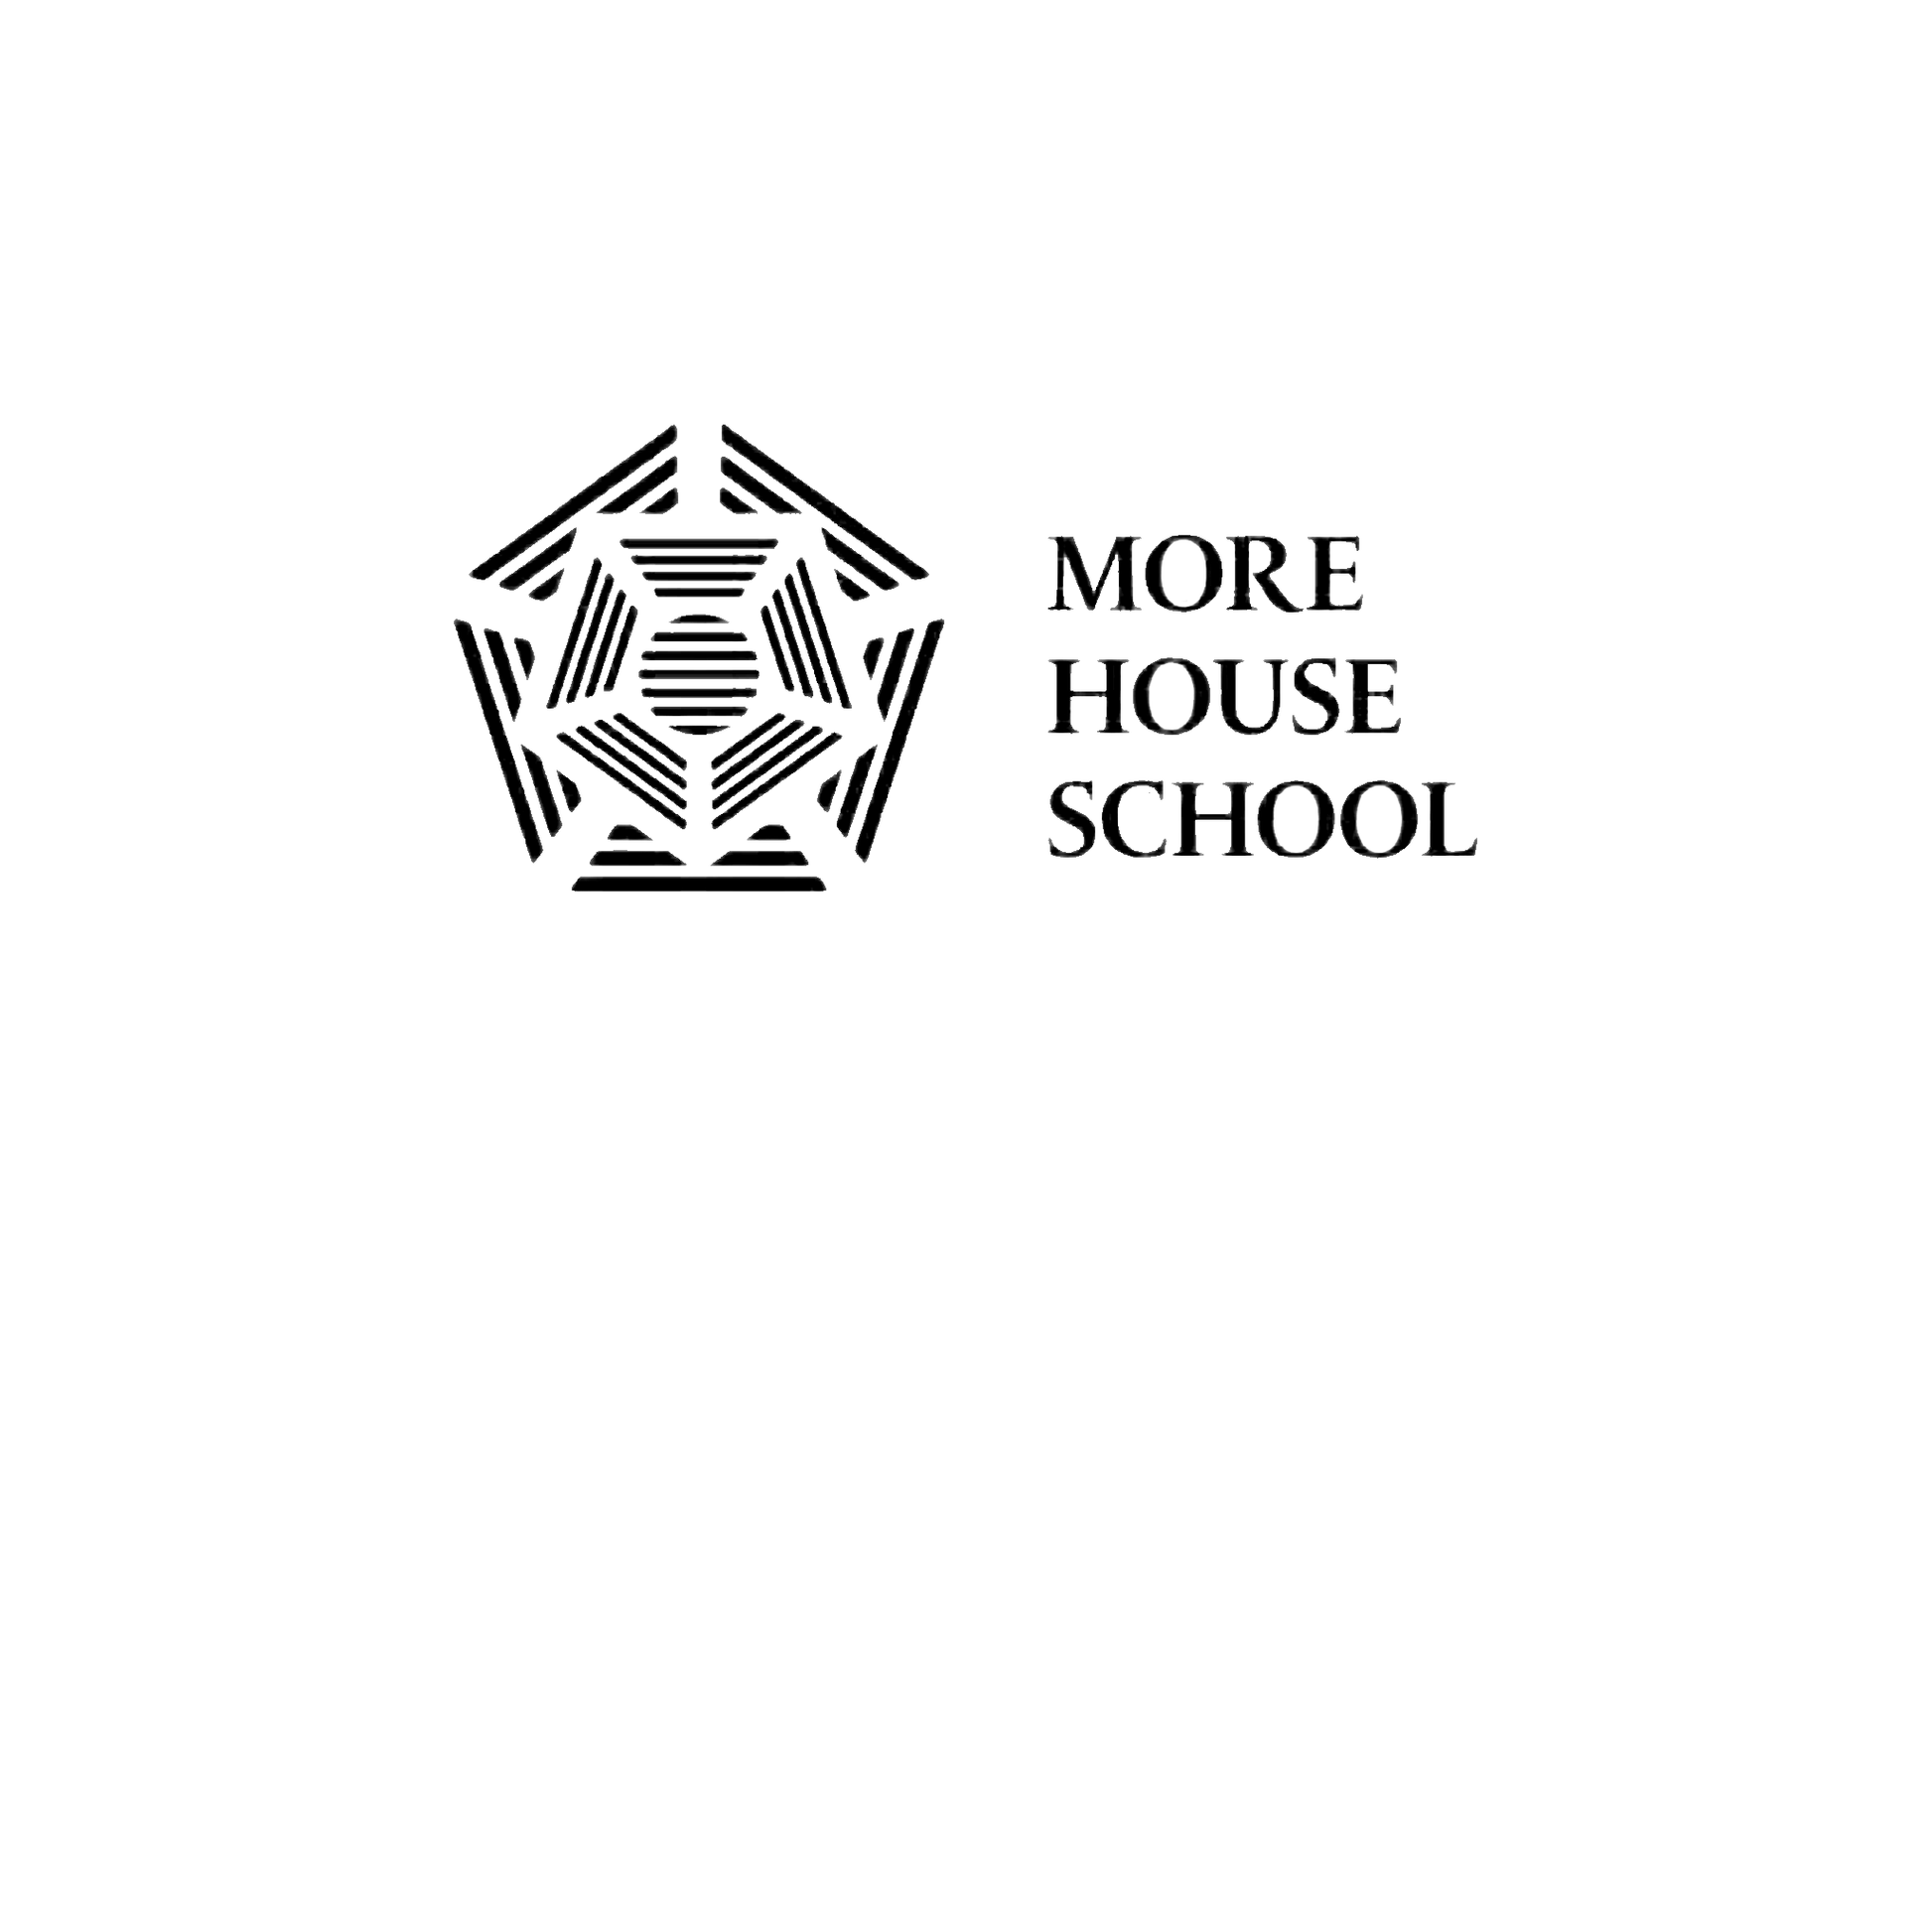 More House School: 11+ Maths (2014) [91]